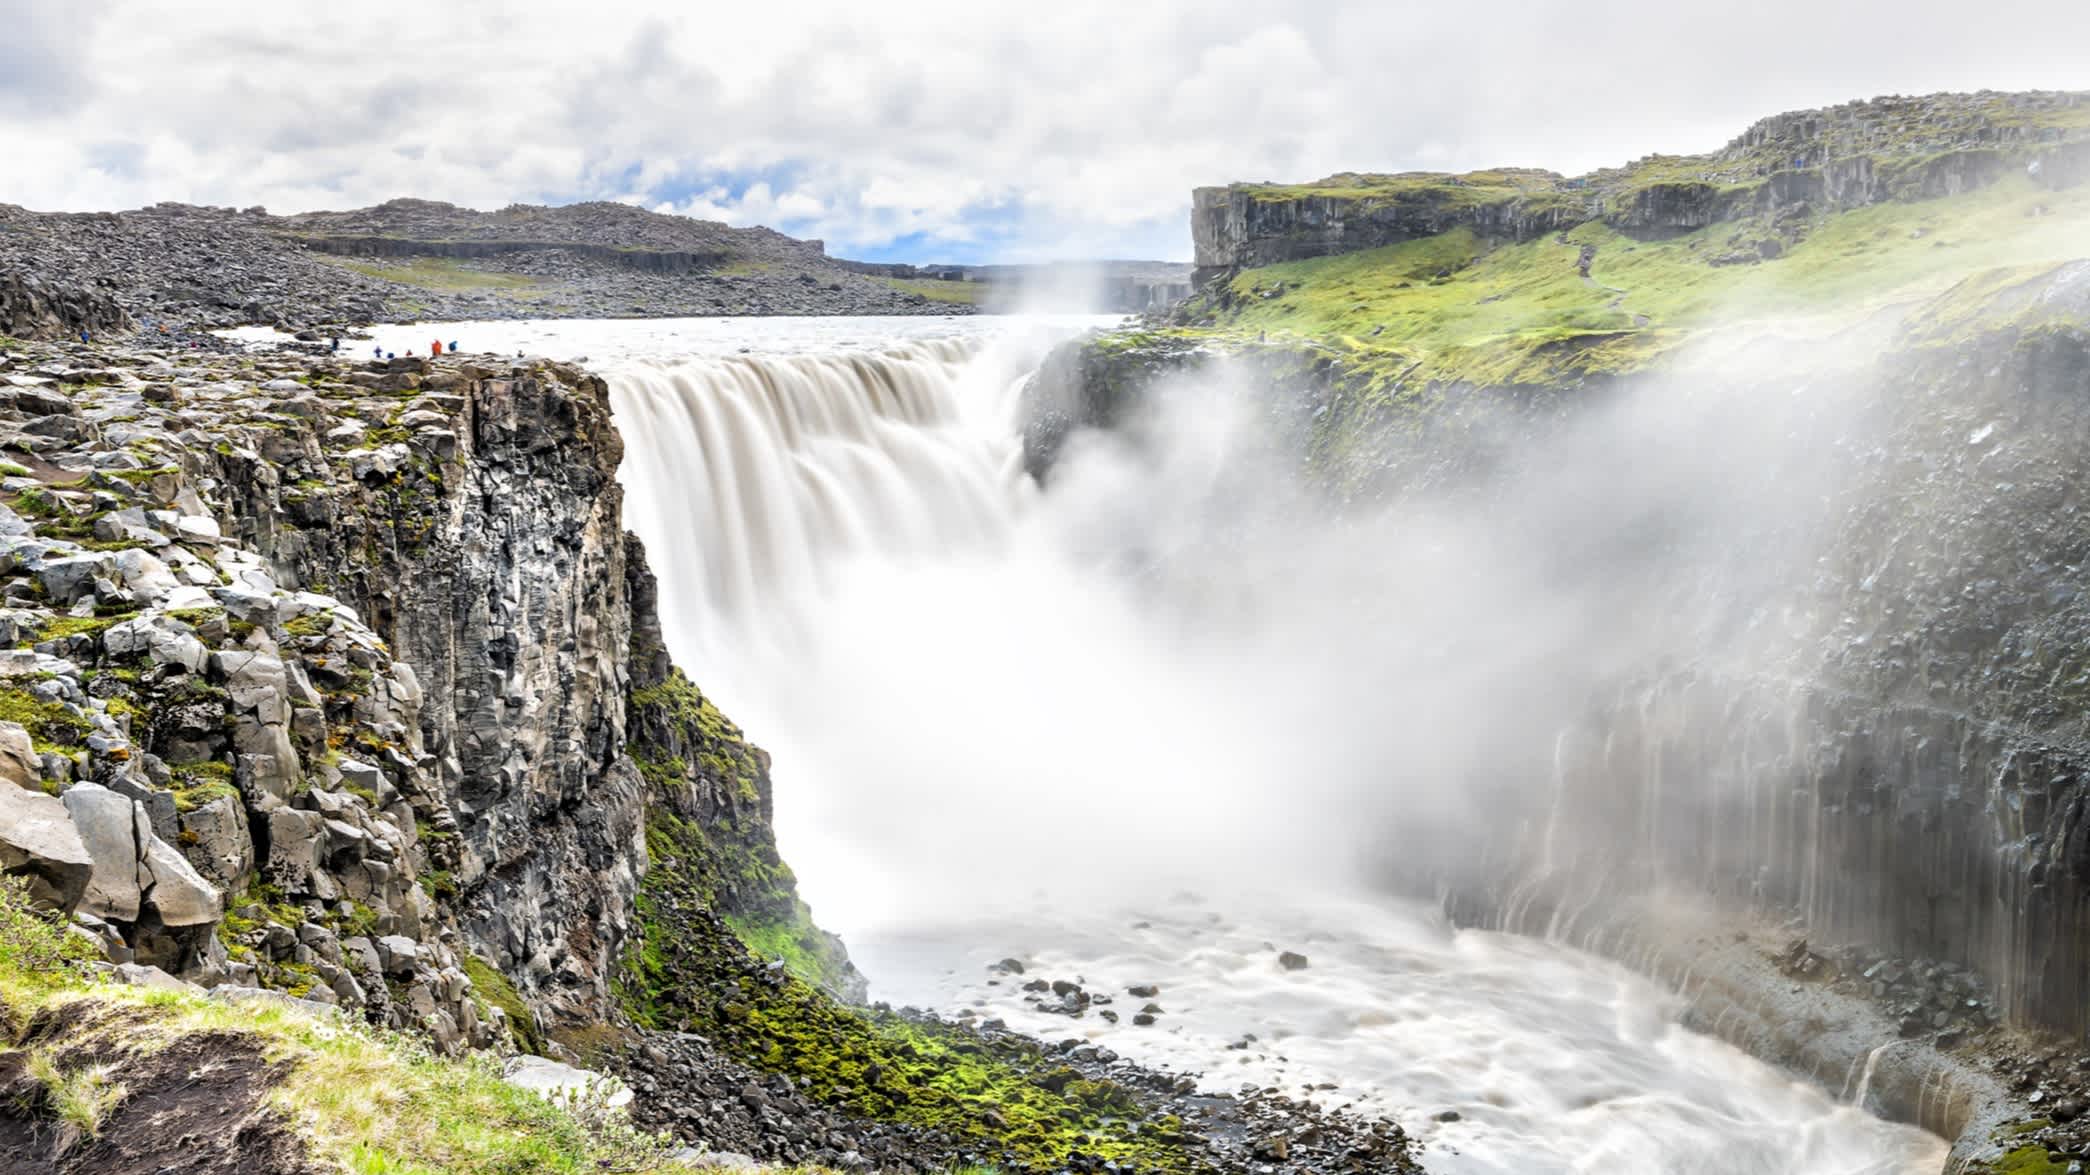 L'impressionnante chute d'eau de Dettifoss en Islande